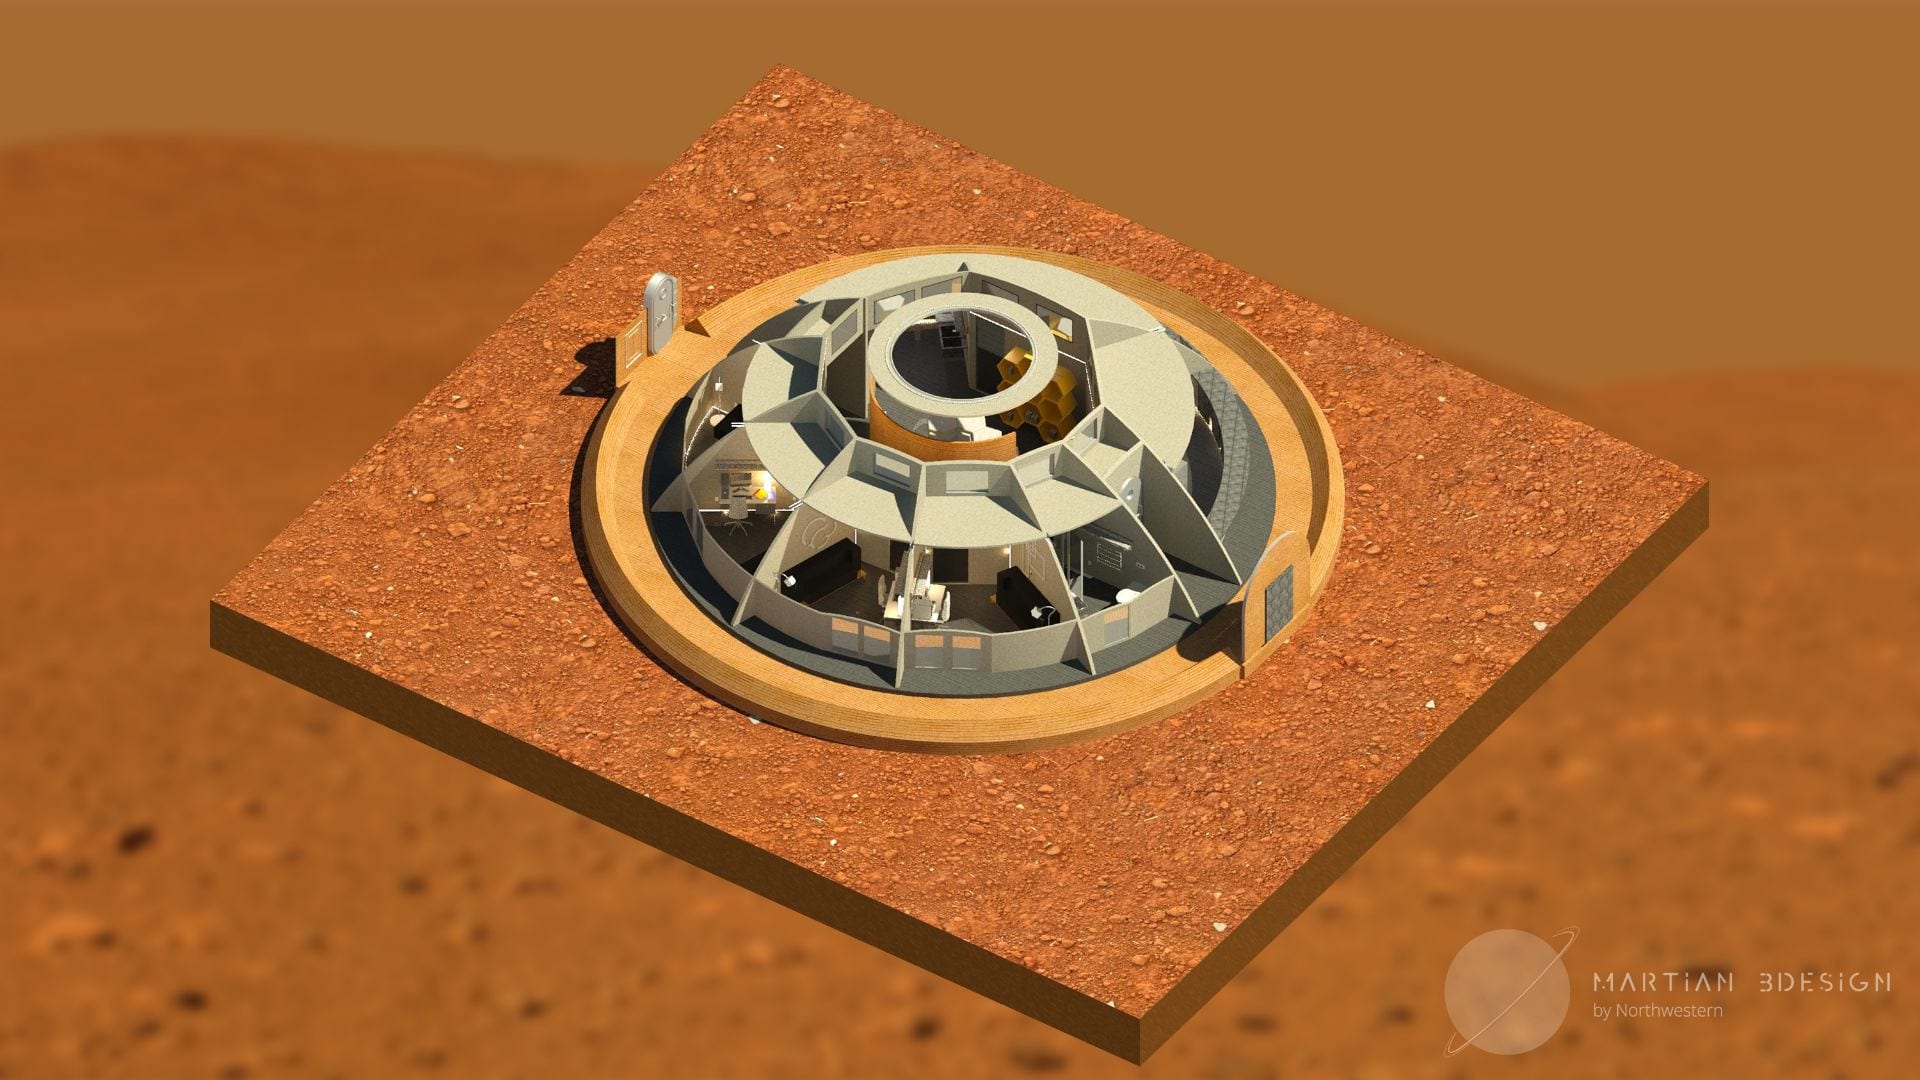 Northwestern Martian Habitat Interior Overview